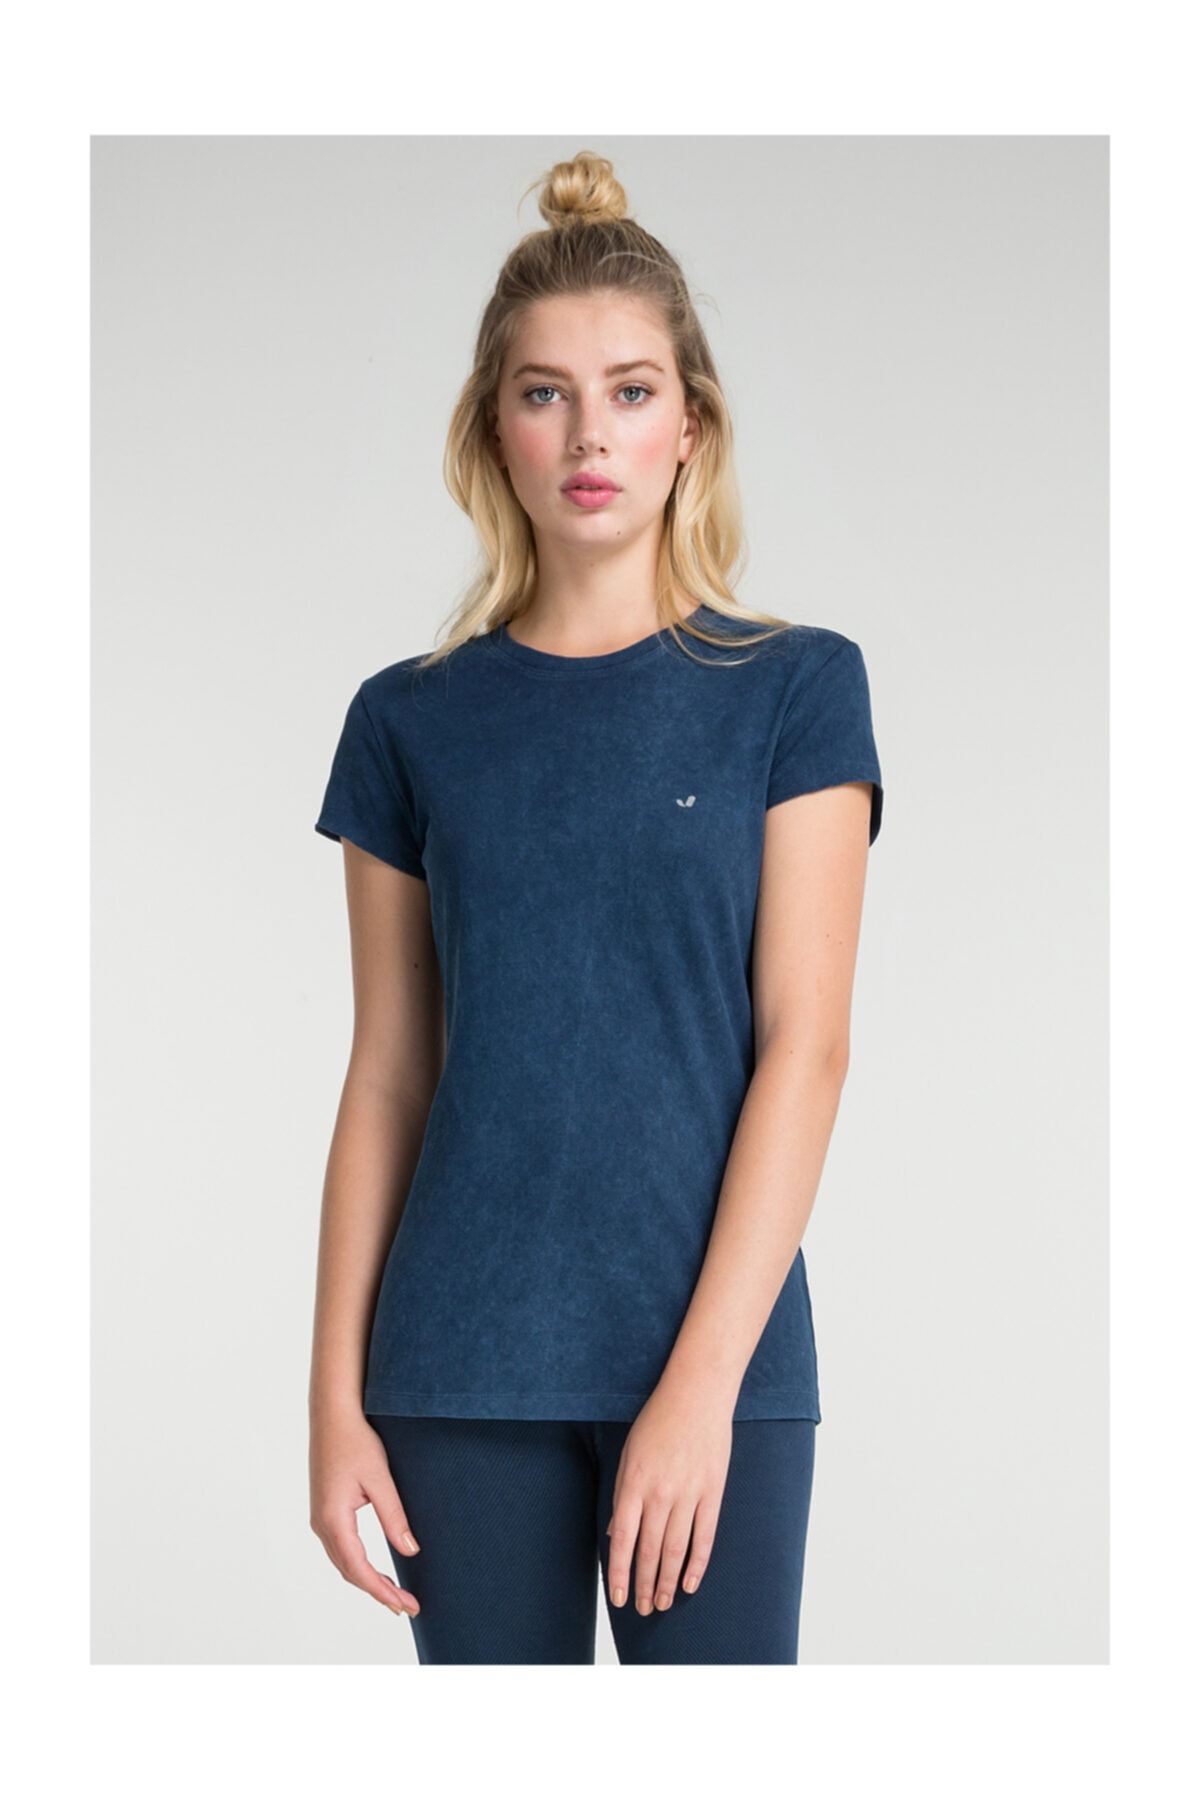 Jerf Kadın Spor T-Shirt - Sapri Mavi - 588889